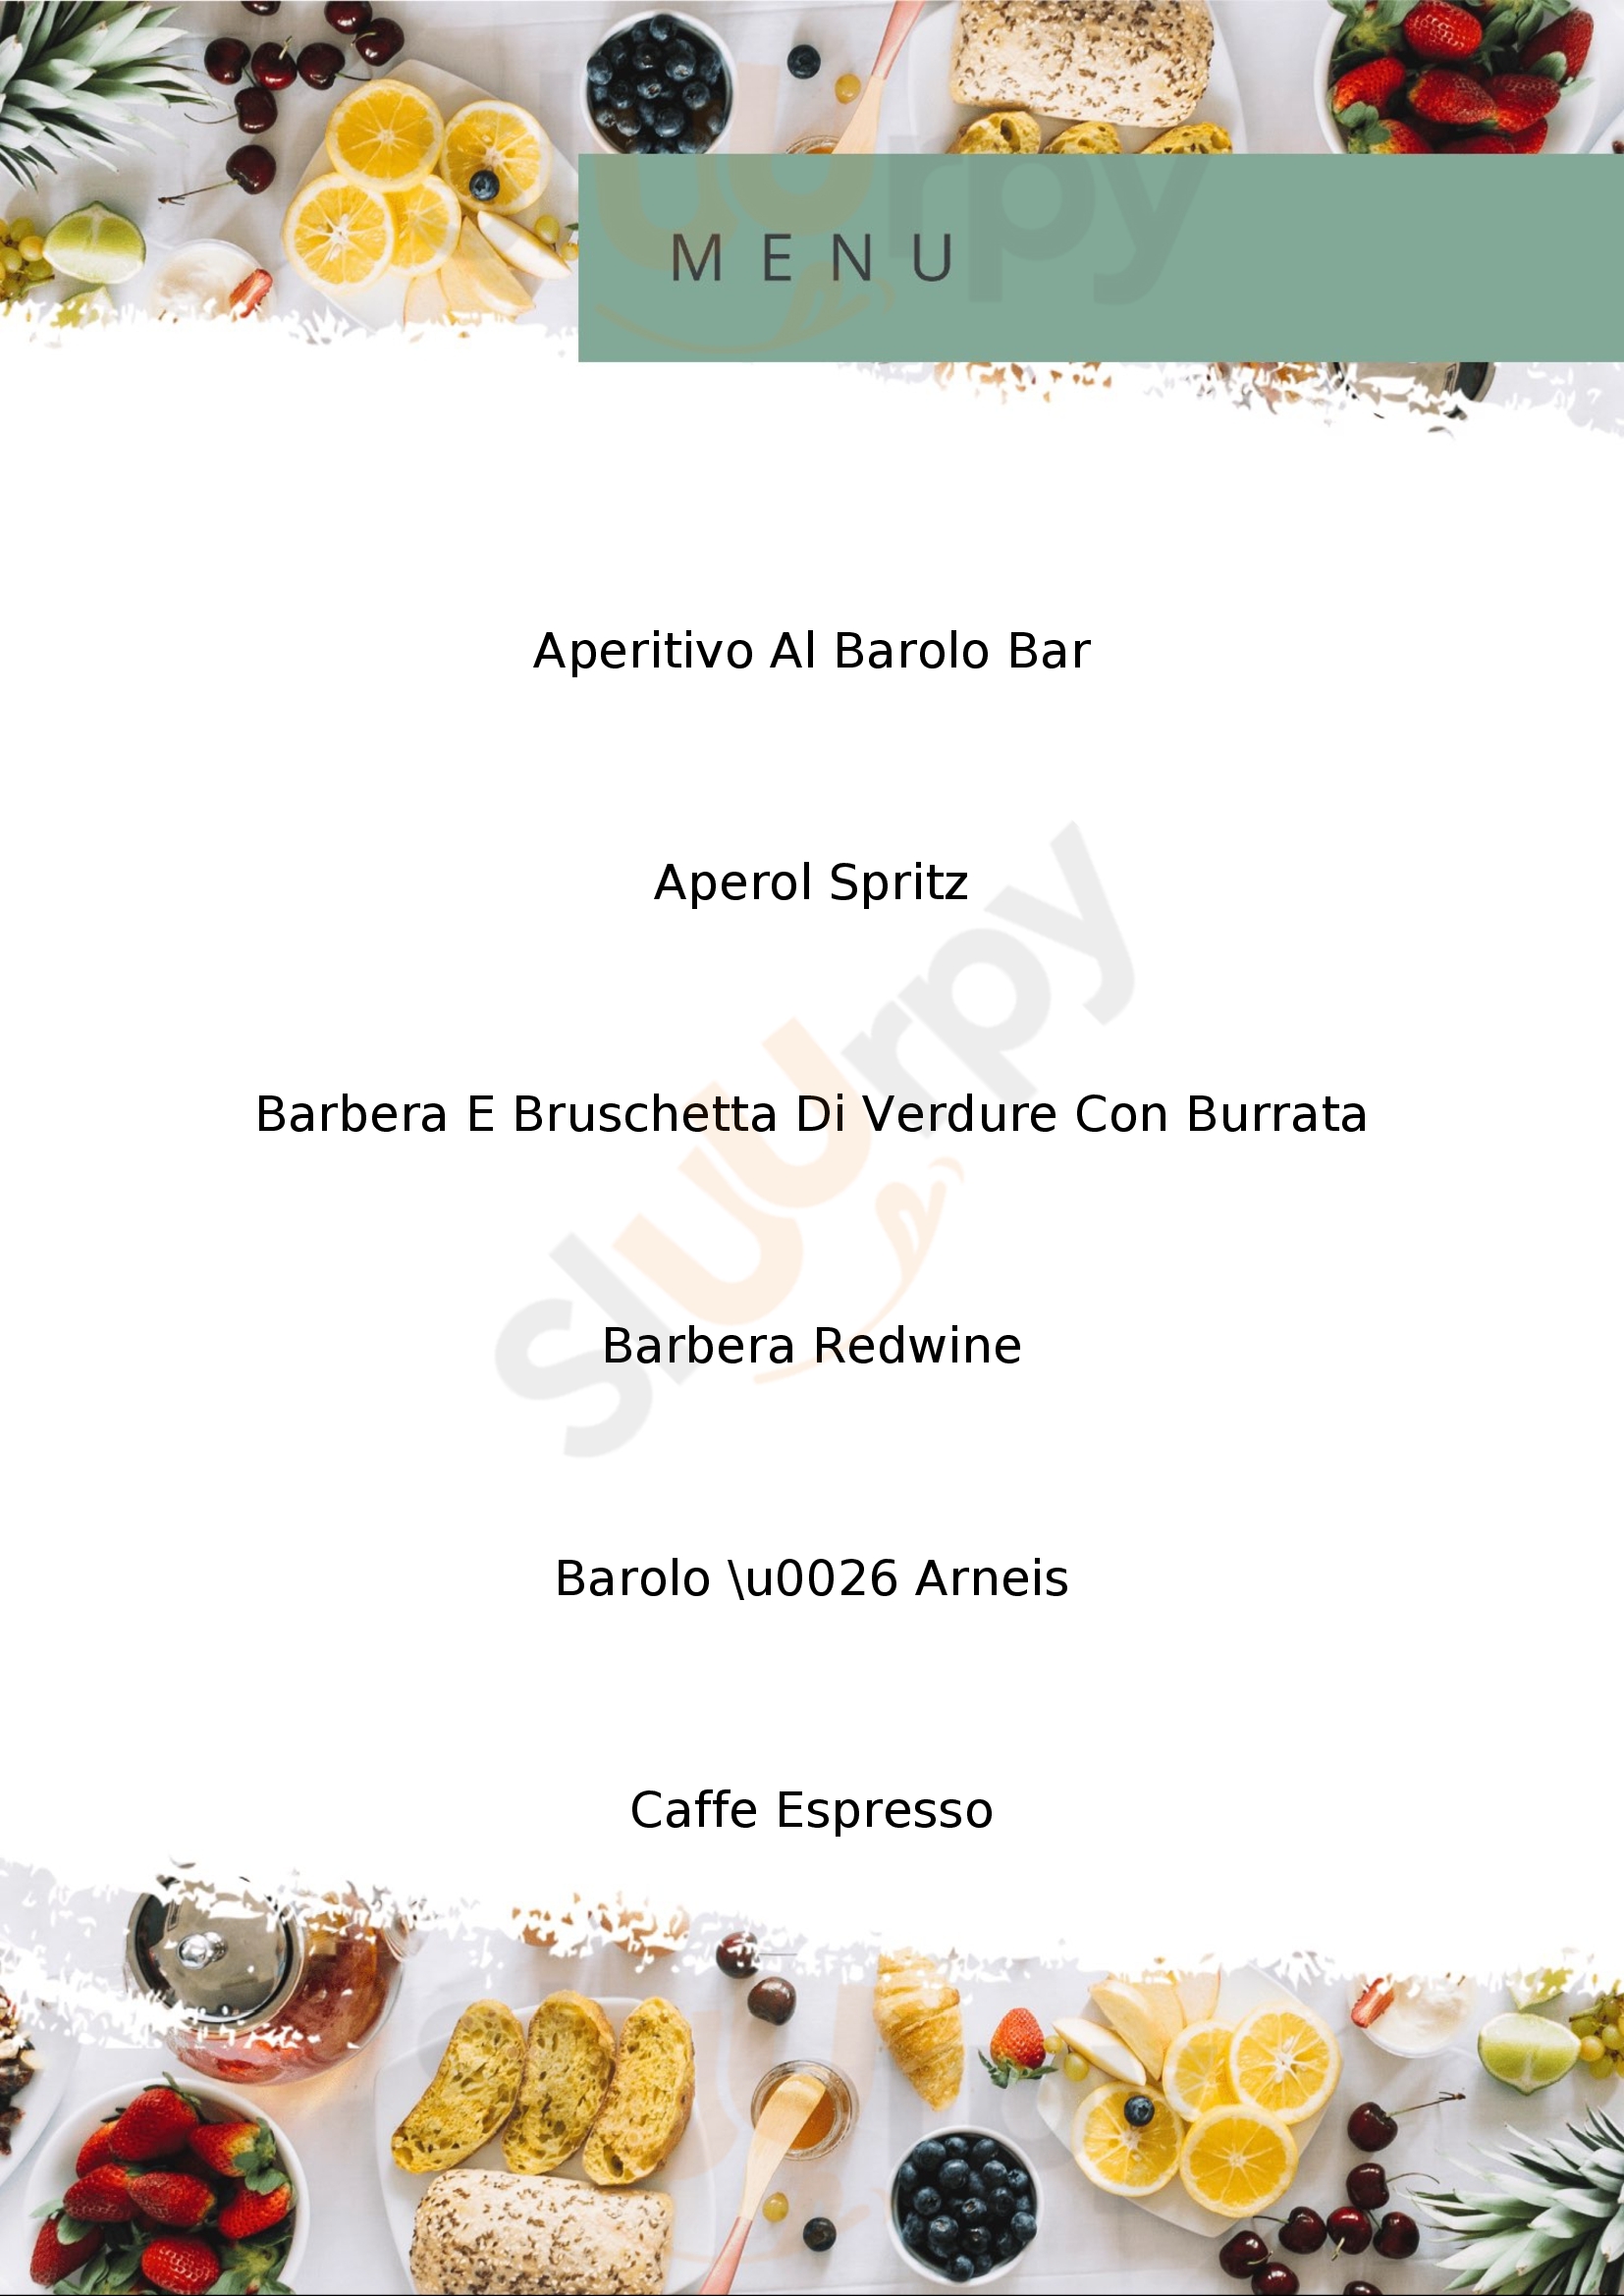 Bar Barolo Enoteca Monforte d'Alba menù 1 pagina